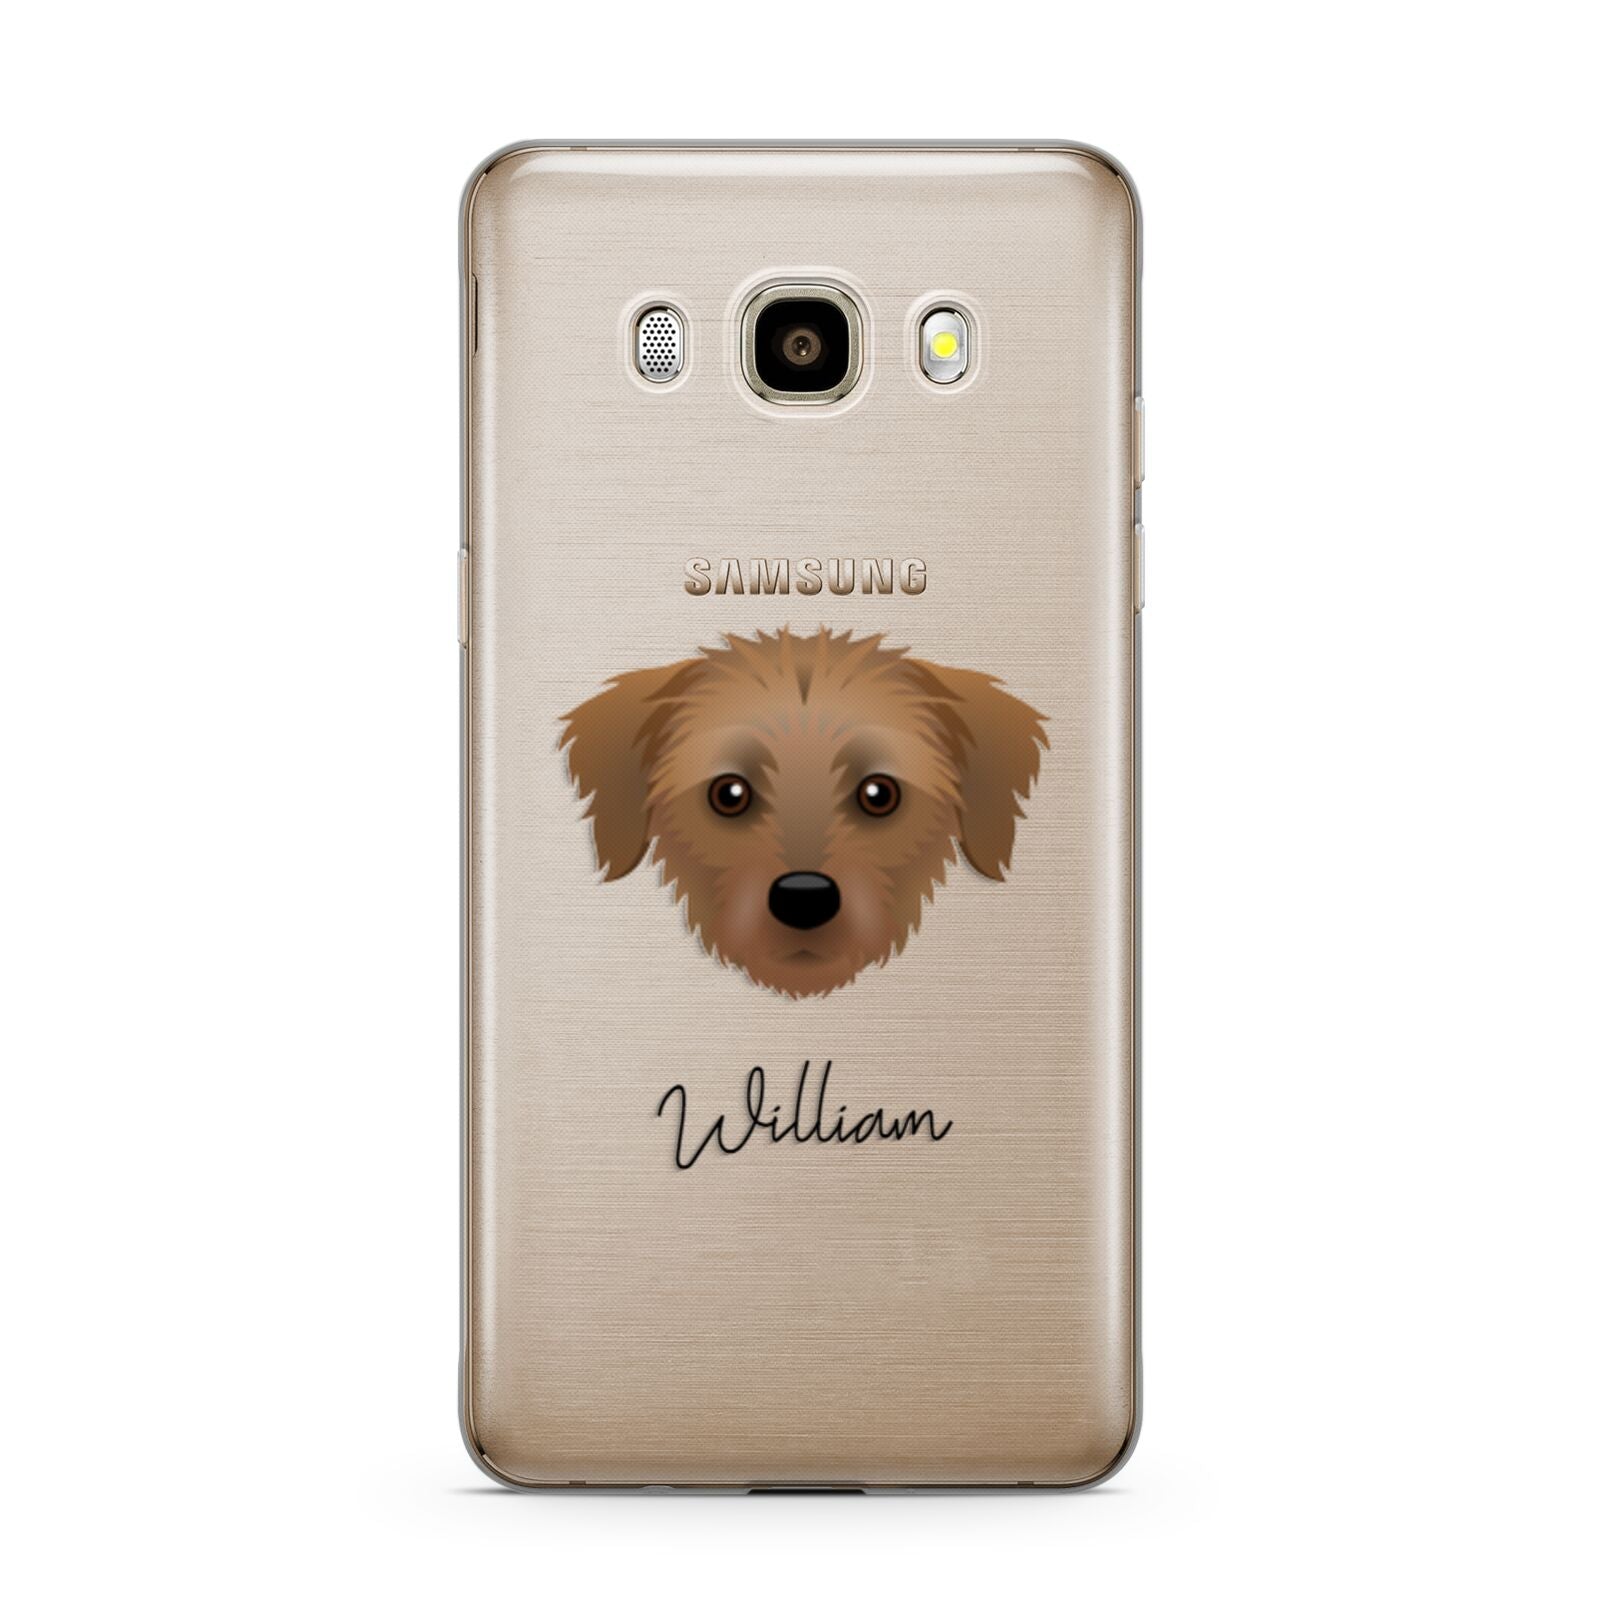 Dorkie Personalised Samsung Galaxy J7 2016 Case on gold phone